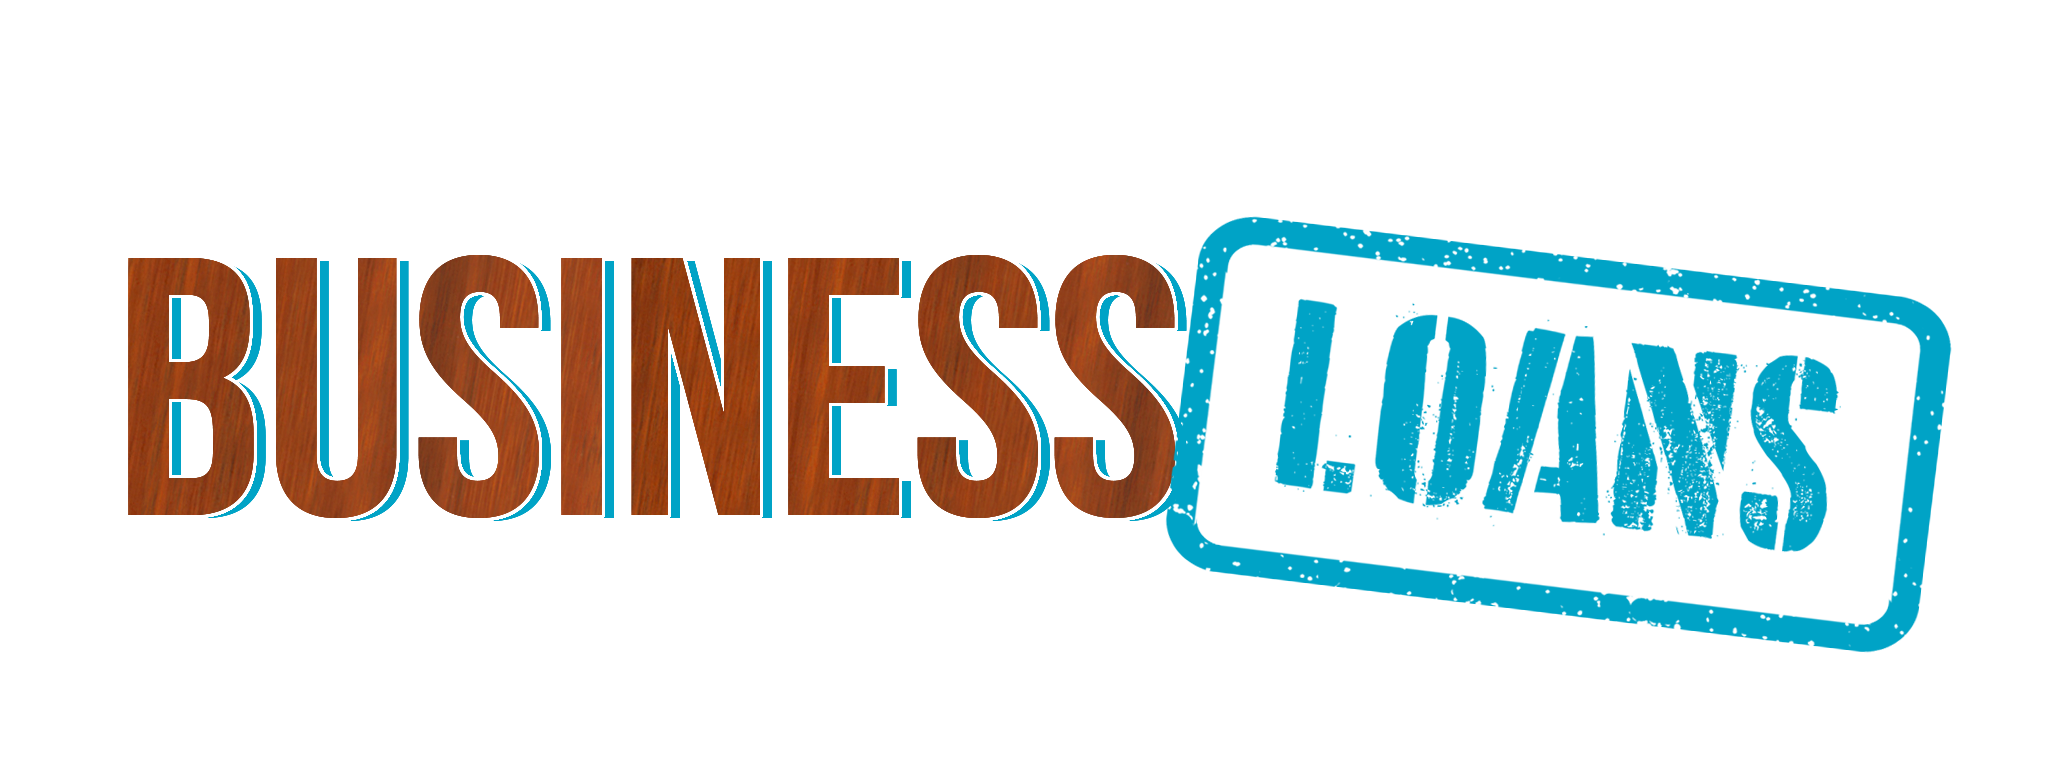 business loans logo